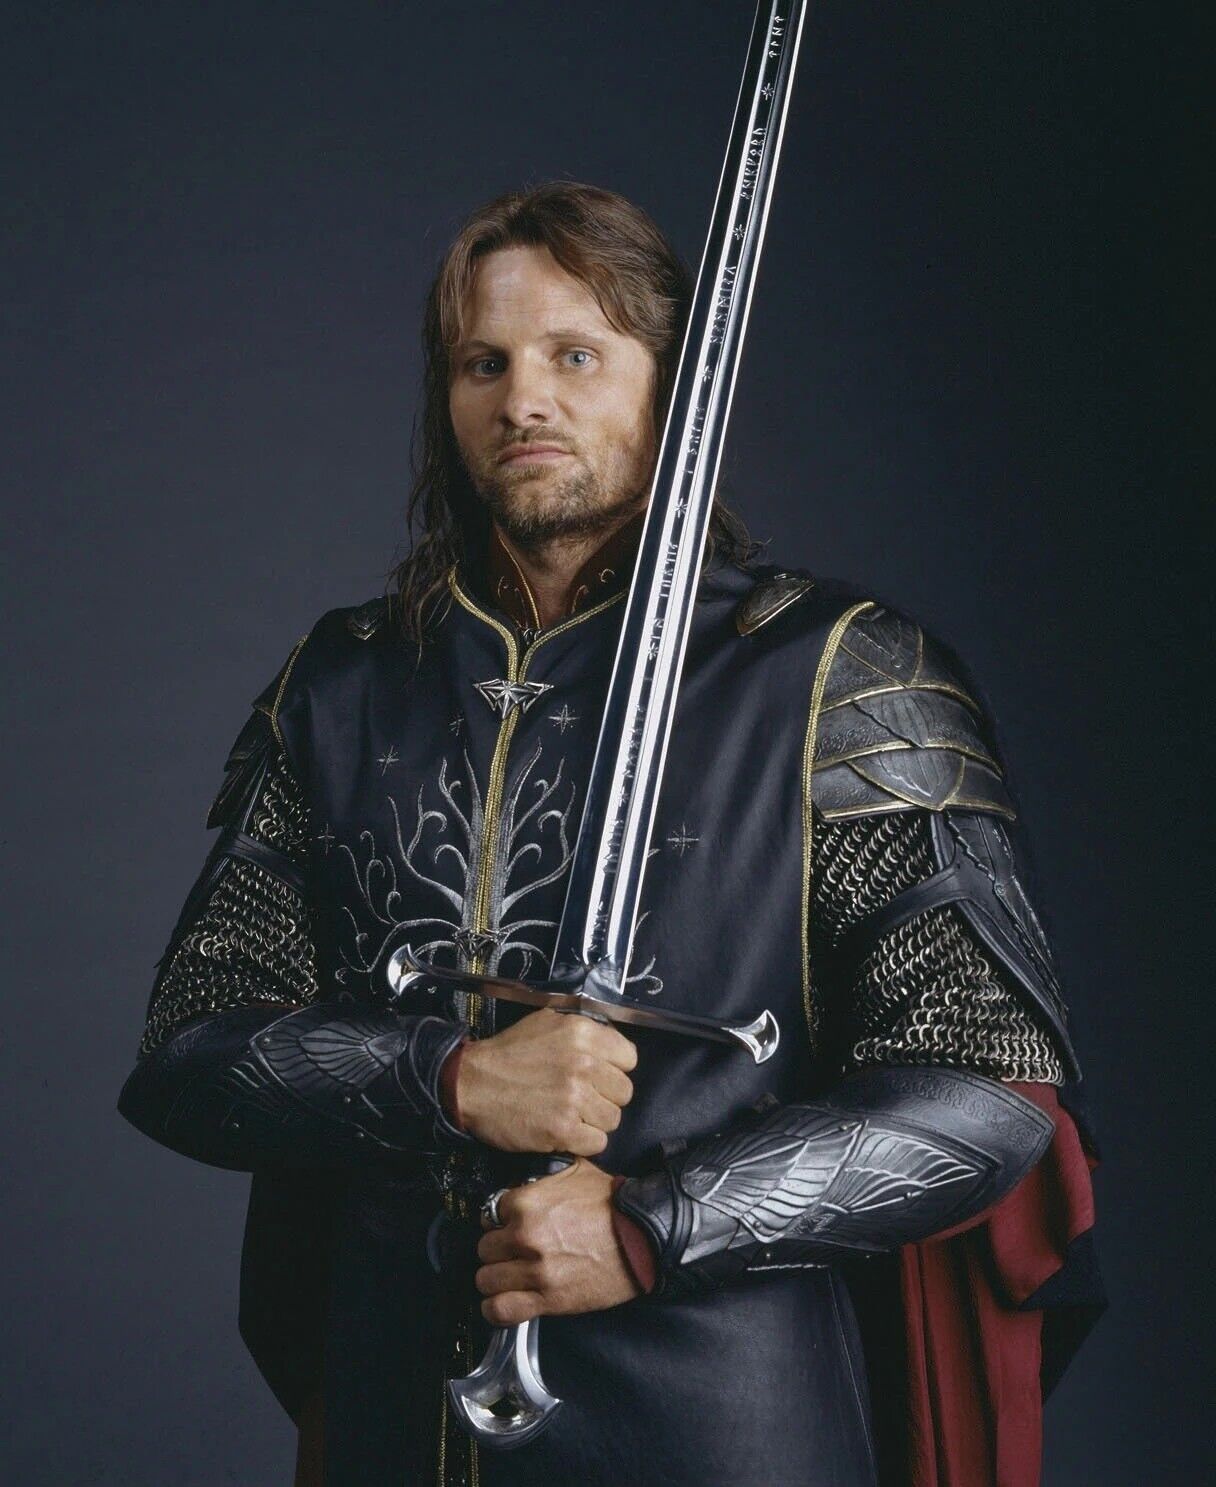 Anduril Sword Lord of the Ring Sword of Aragorn Narsil Sword LOTR Sword ReplicaW